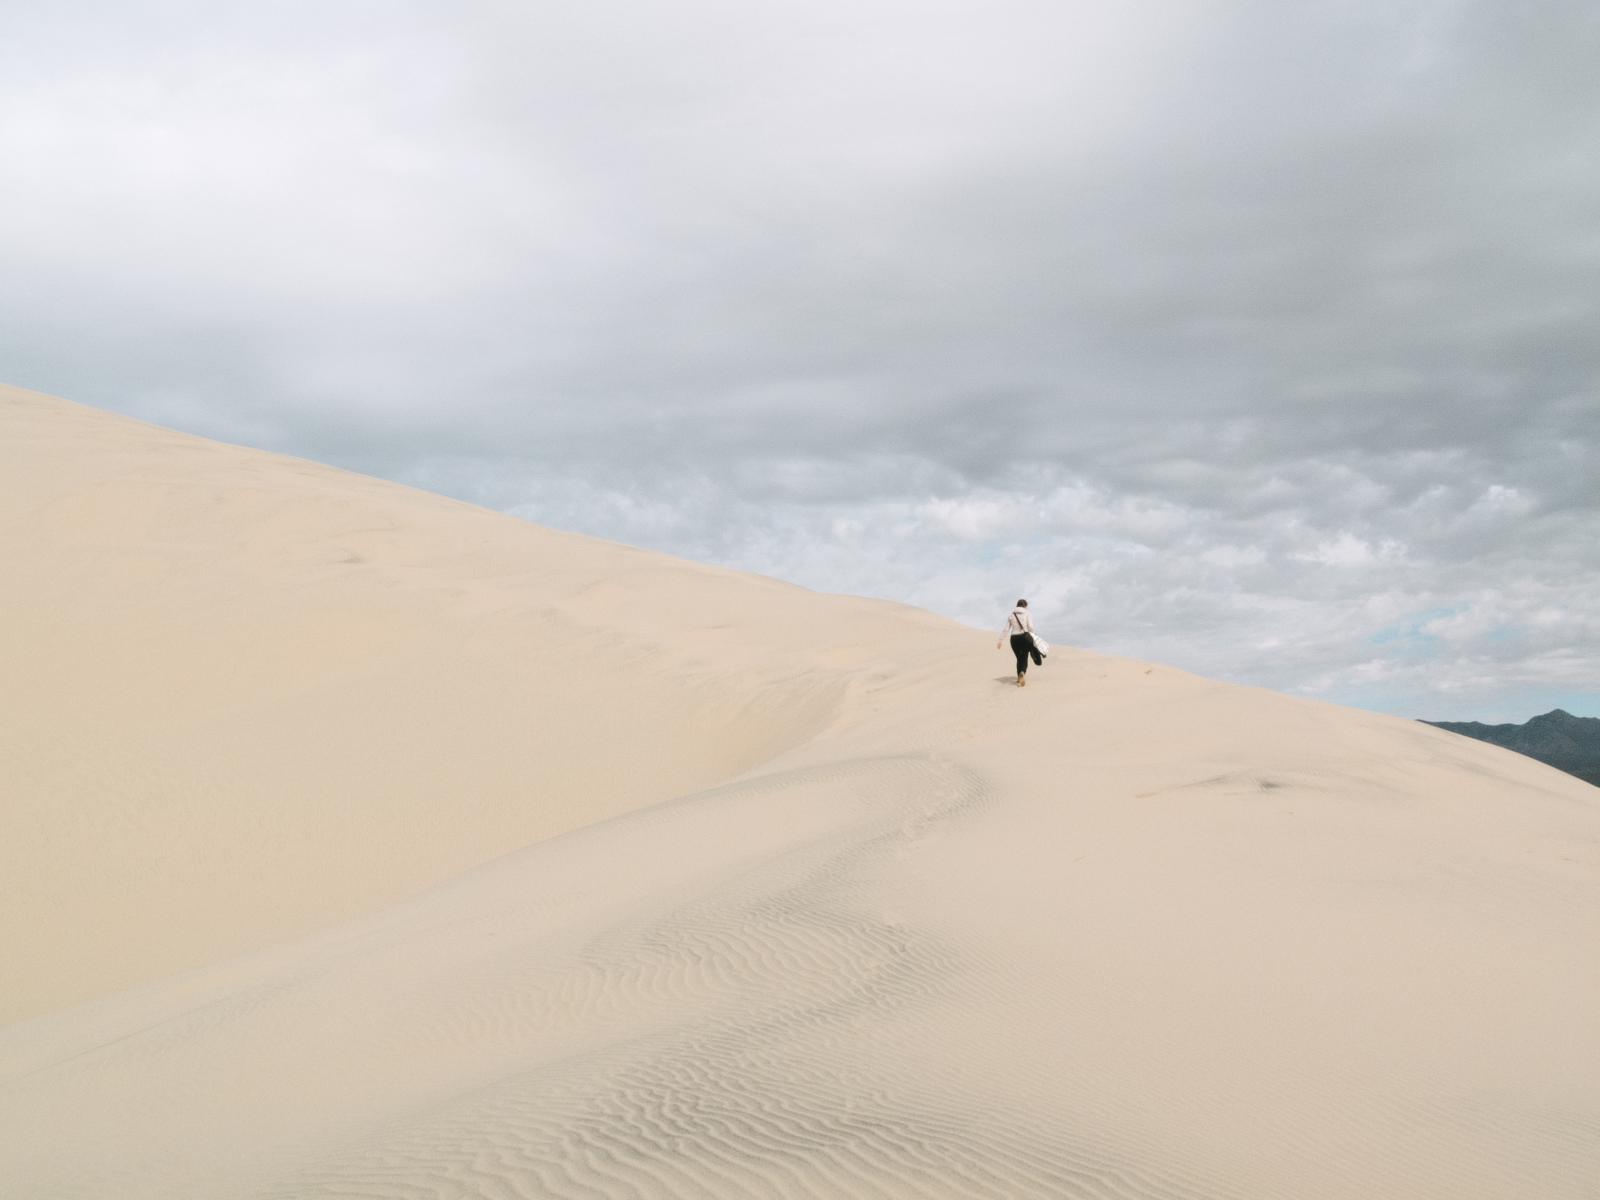 Killpecker Dunes, California | Buy this image